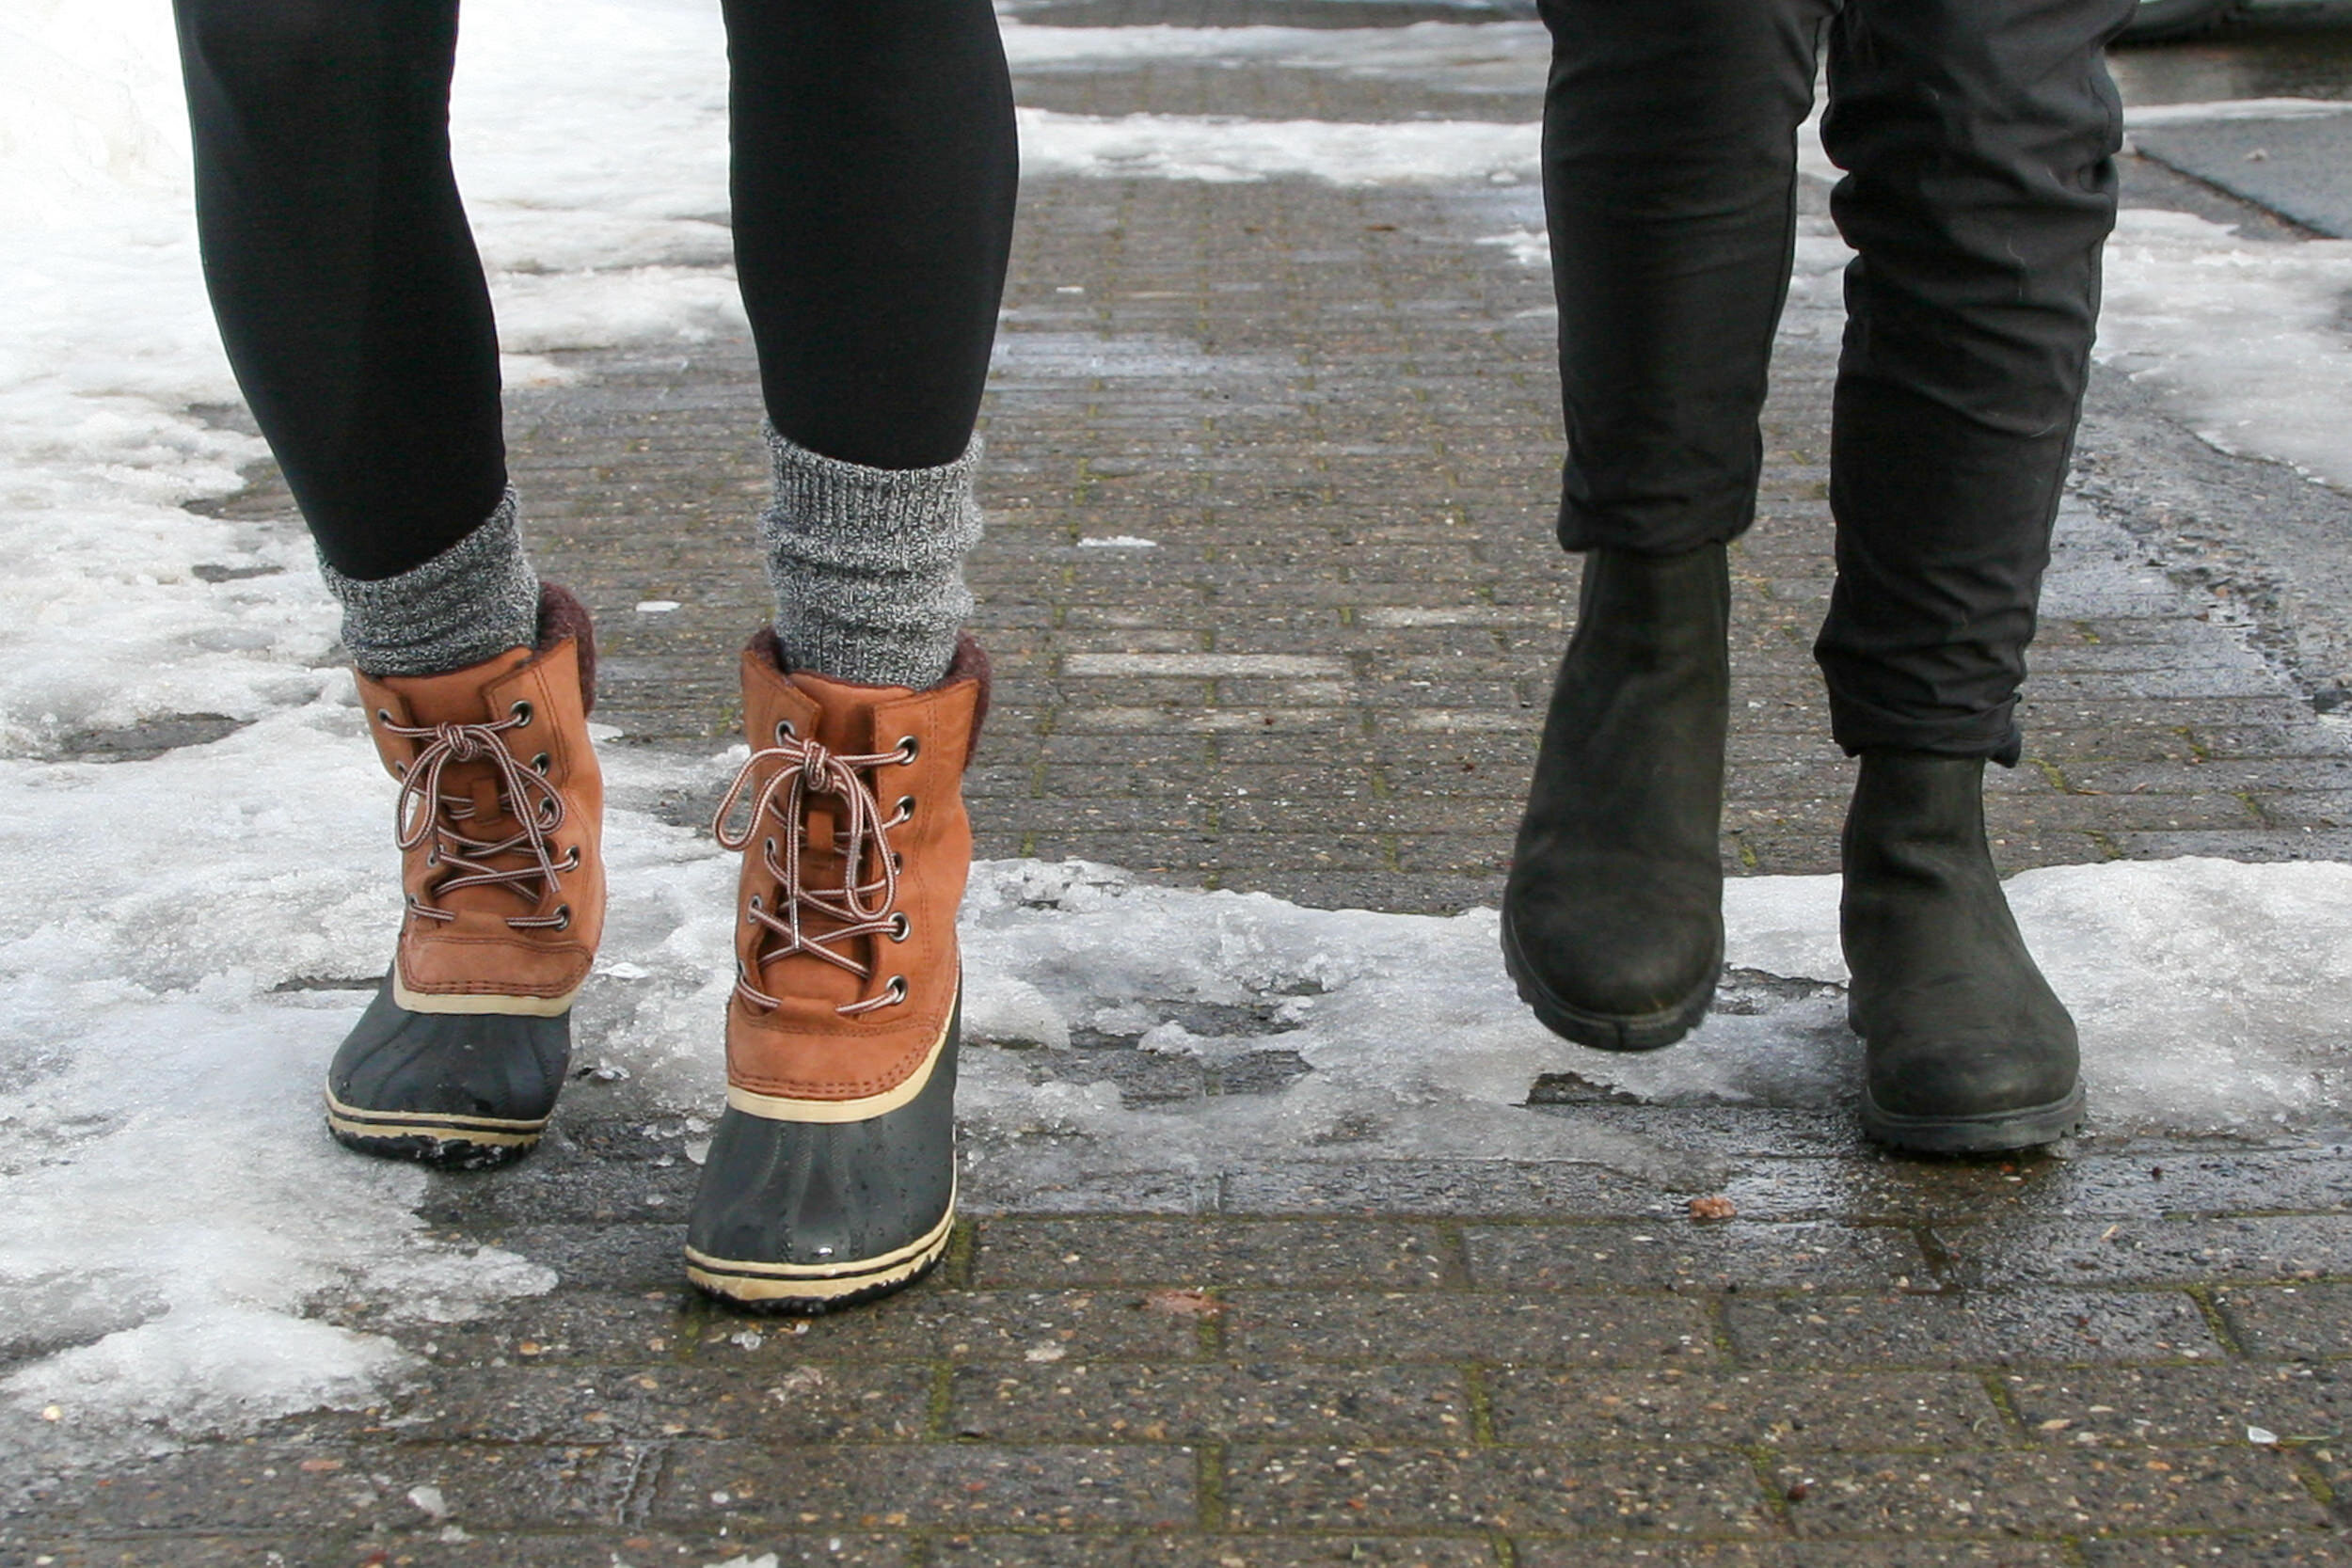 slim snow boots